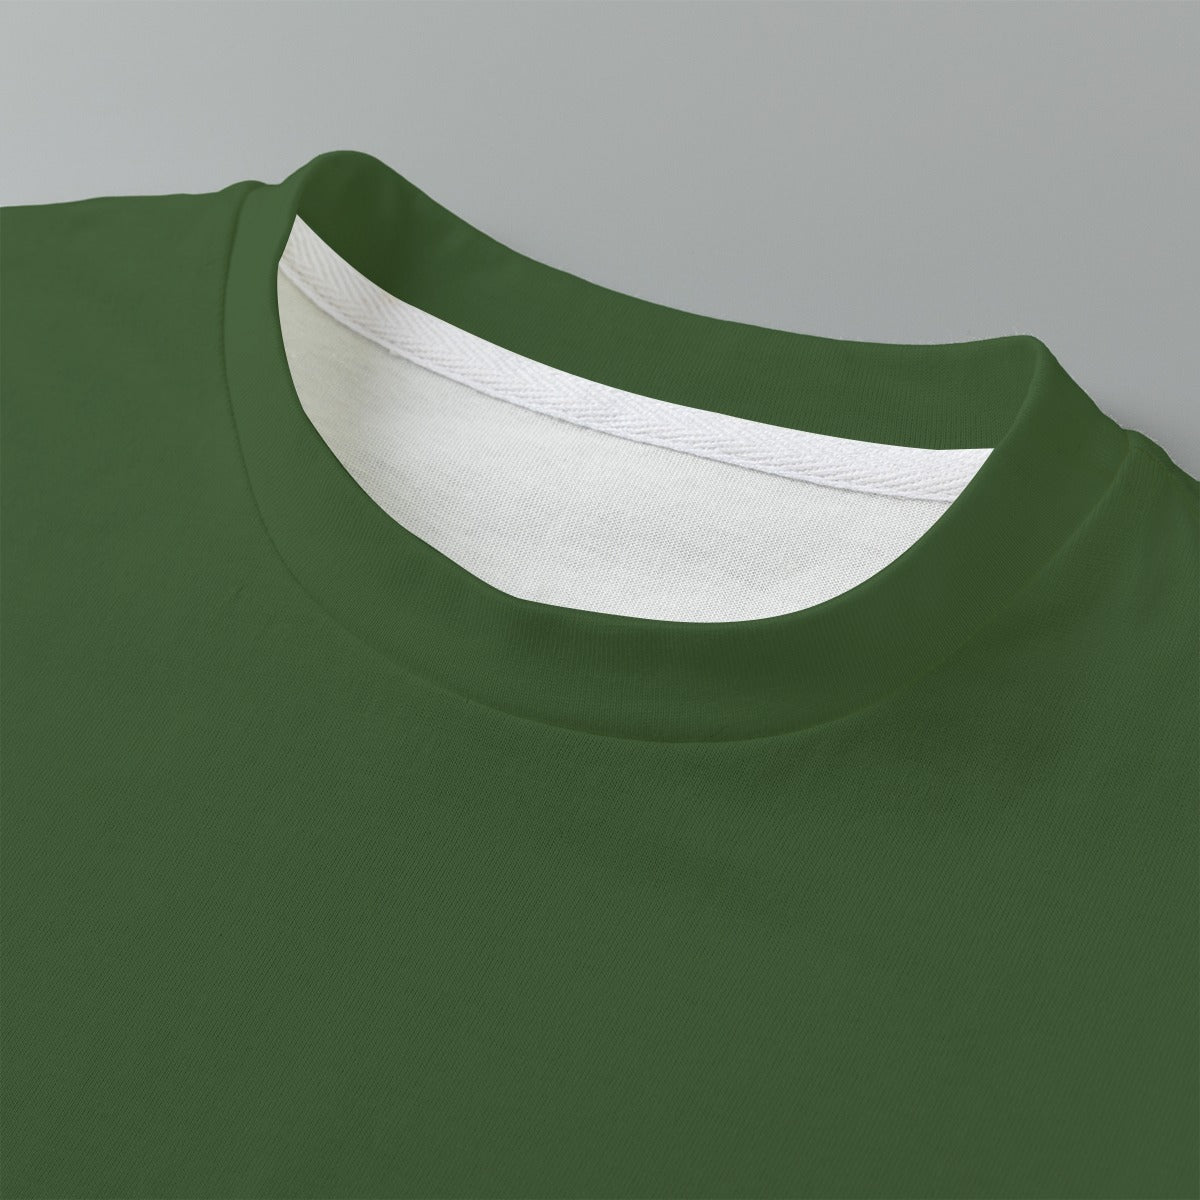 Boys Bulldozer Star T-Shirt in Green 100% Cotton - Clothes that Calm